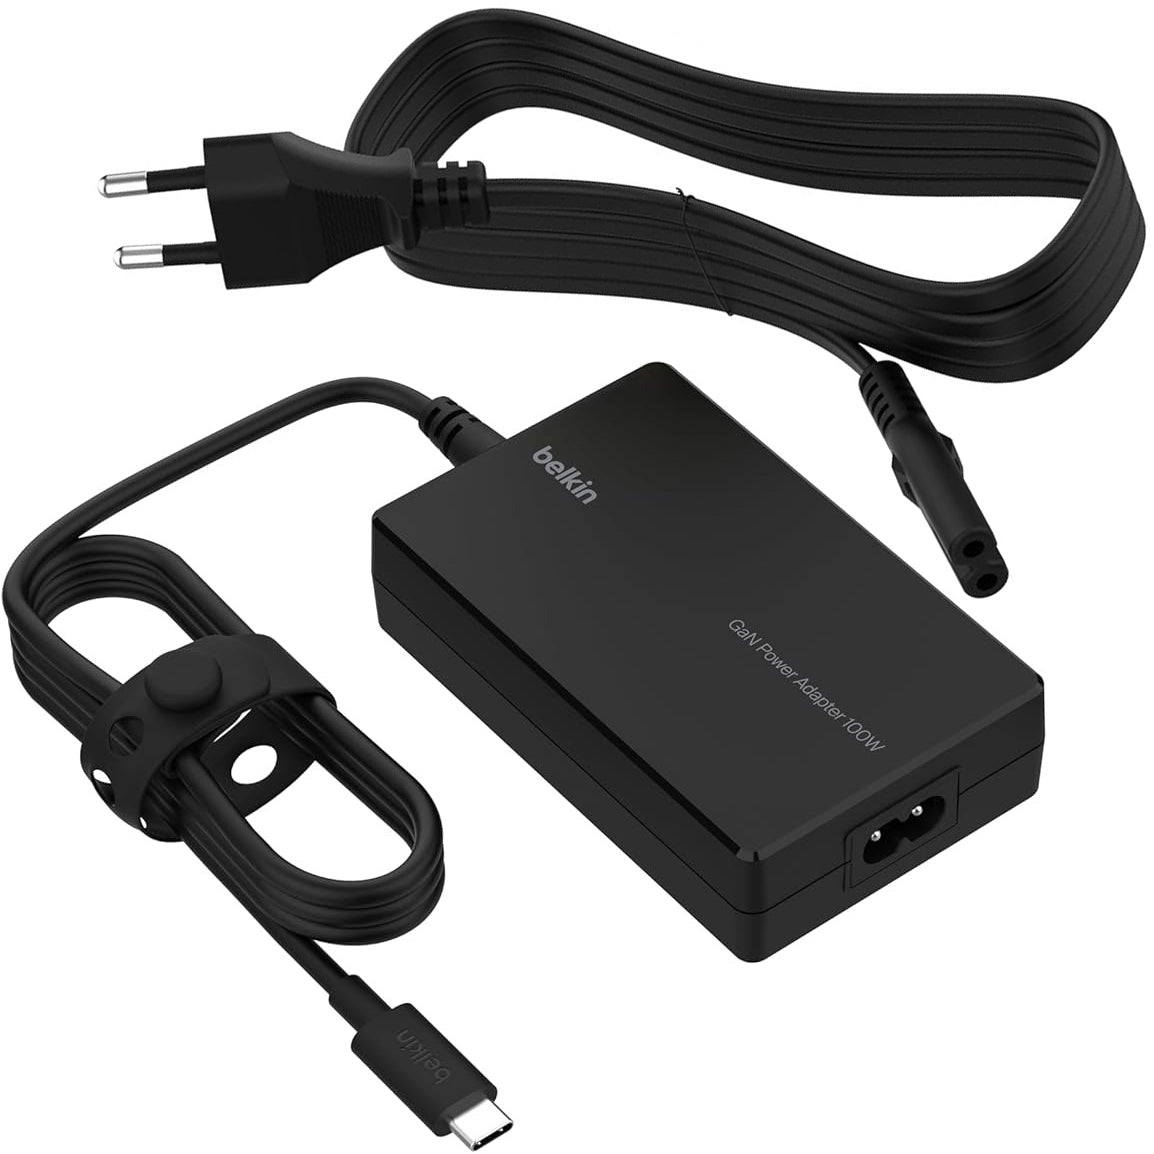 Netzadapter für Laptop Belkin Connect USB-C PD Core Gan PA 100W, Schwarz